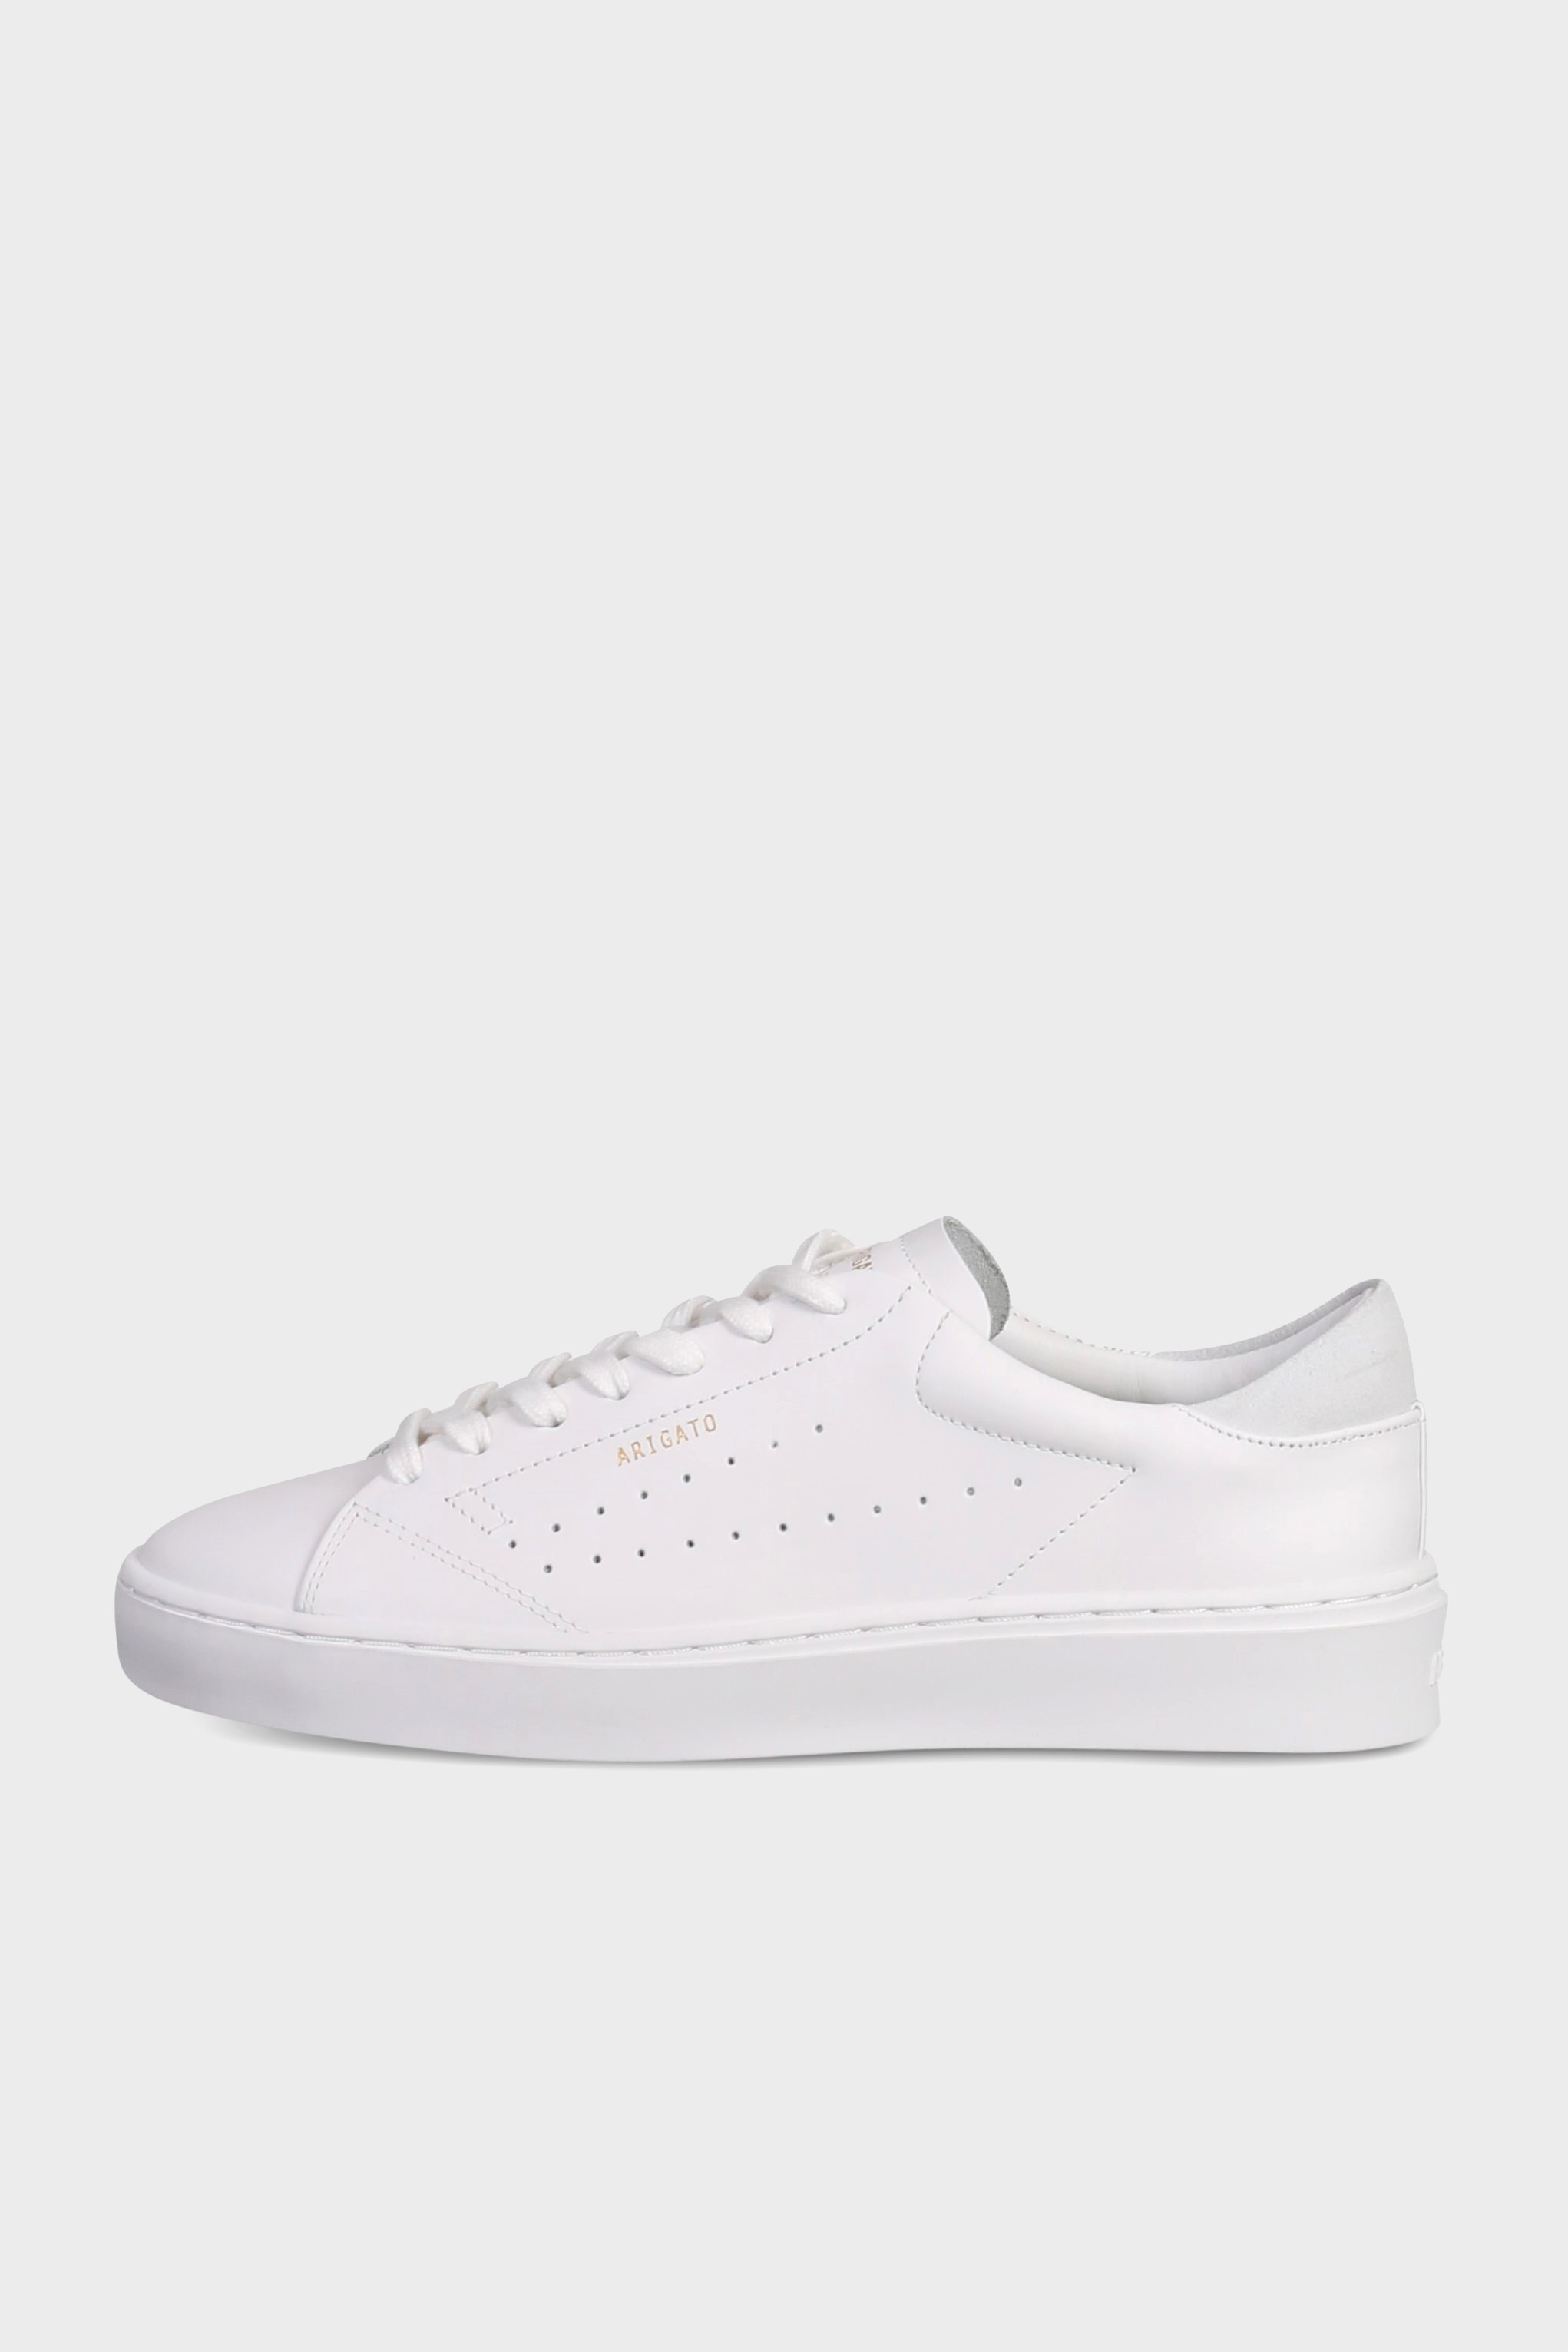 AXEL ARIGATO Court Sneaker in White/Light Grey 45